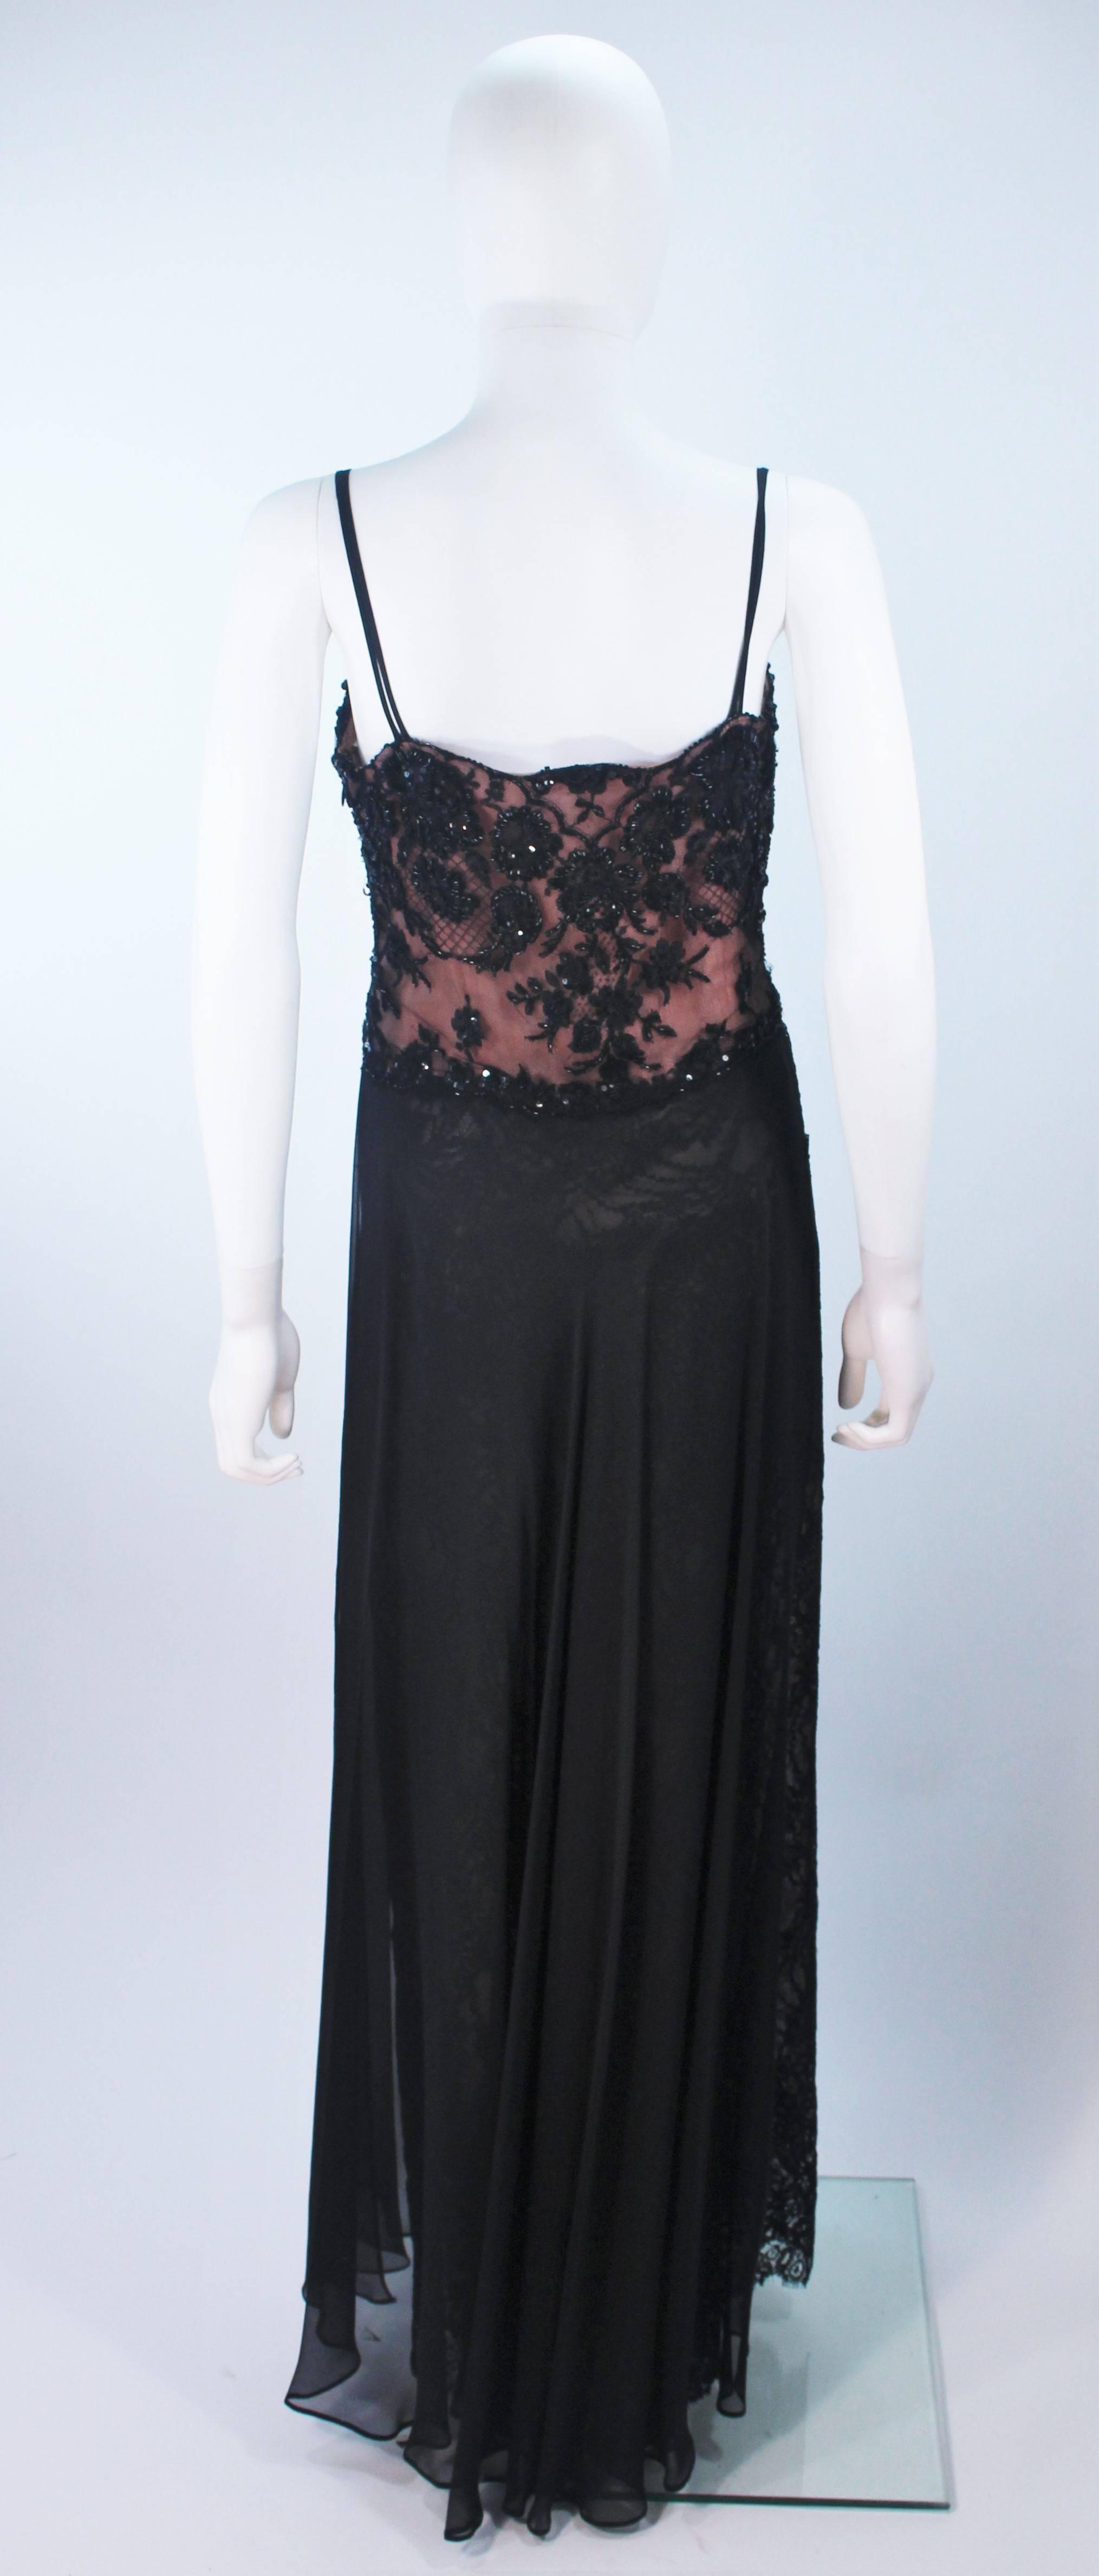 FE ZANDI Beverly Hills Beaded Black Lace Chiffon Gown Size 4 6 For Sale 4